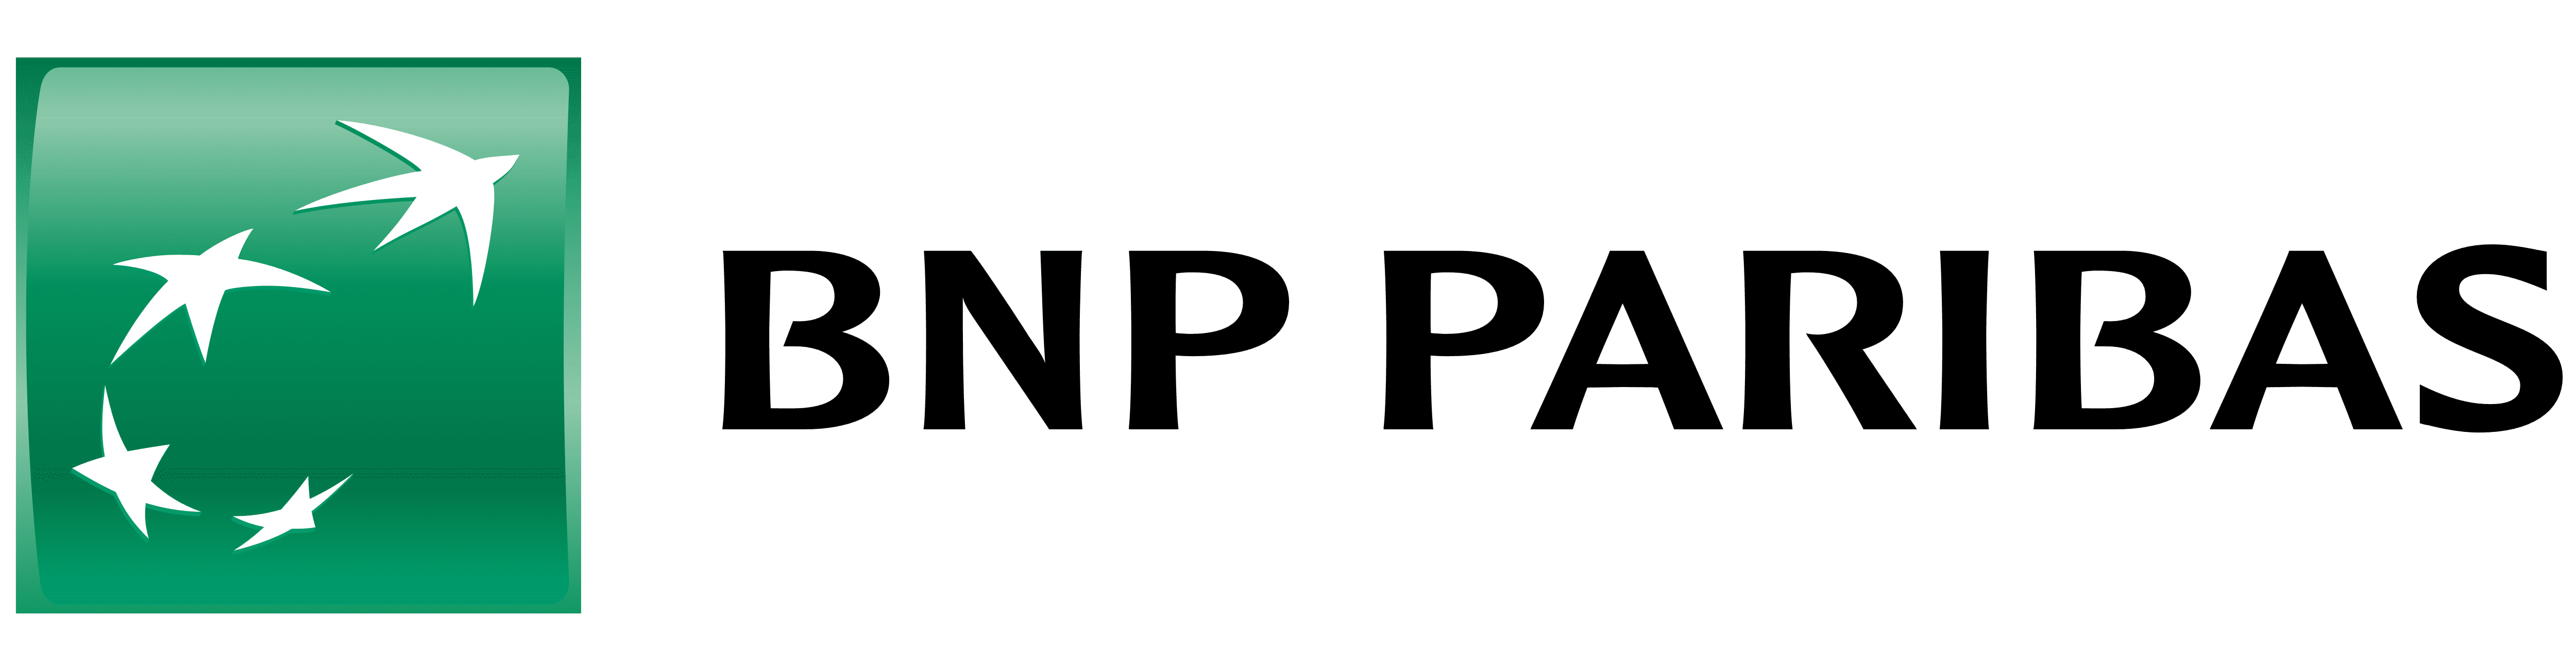 BNP_paribas_logo